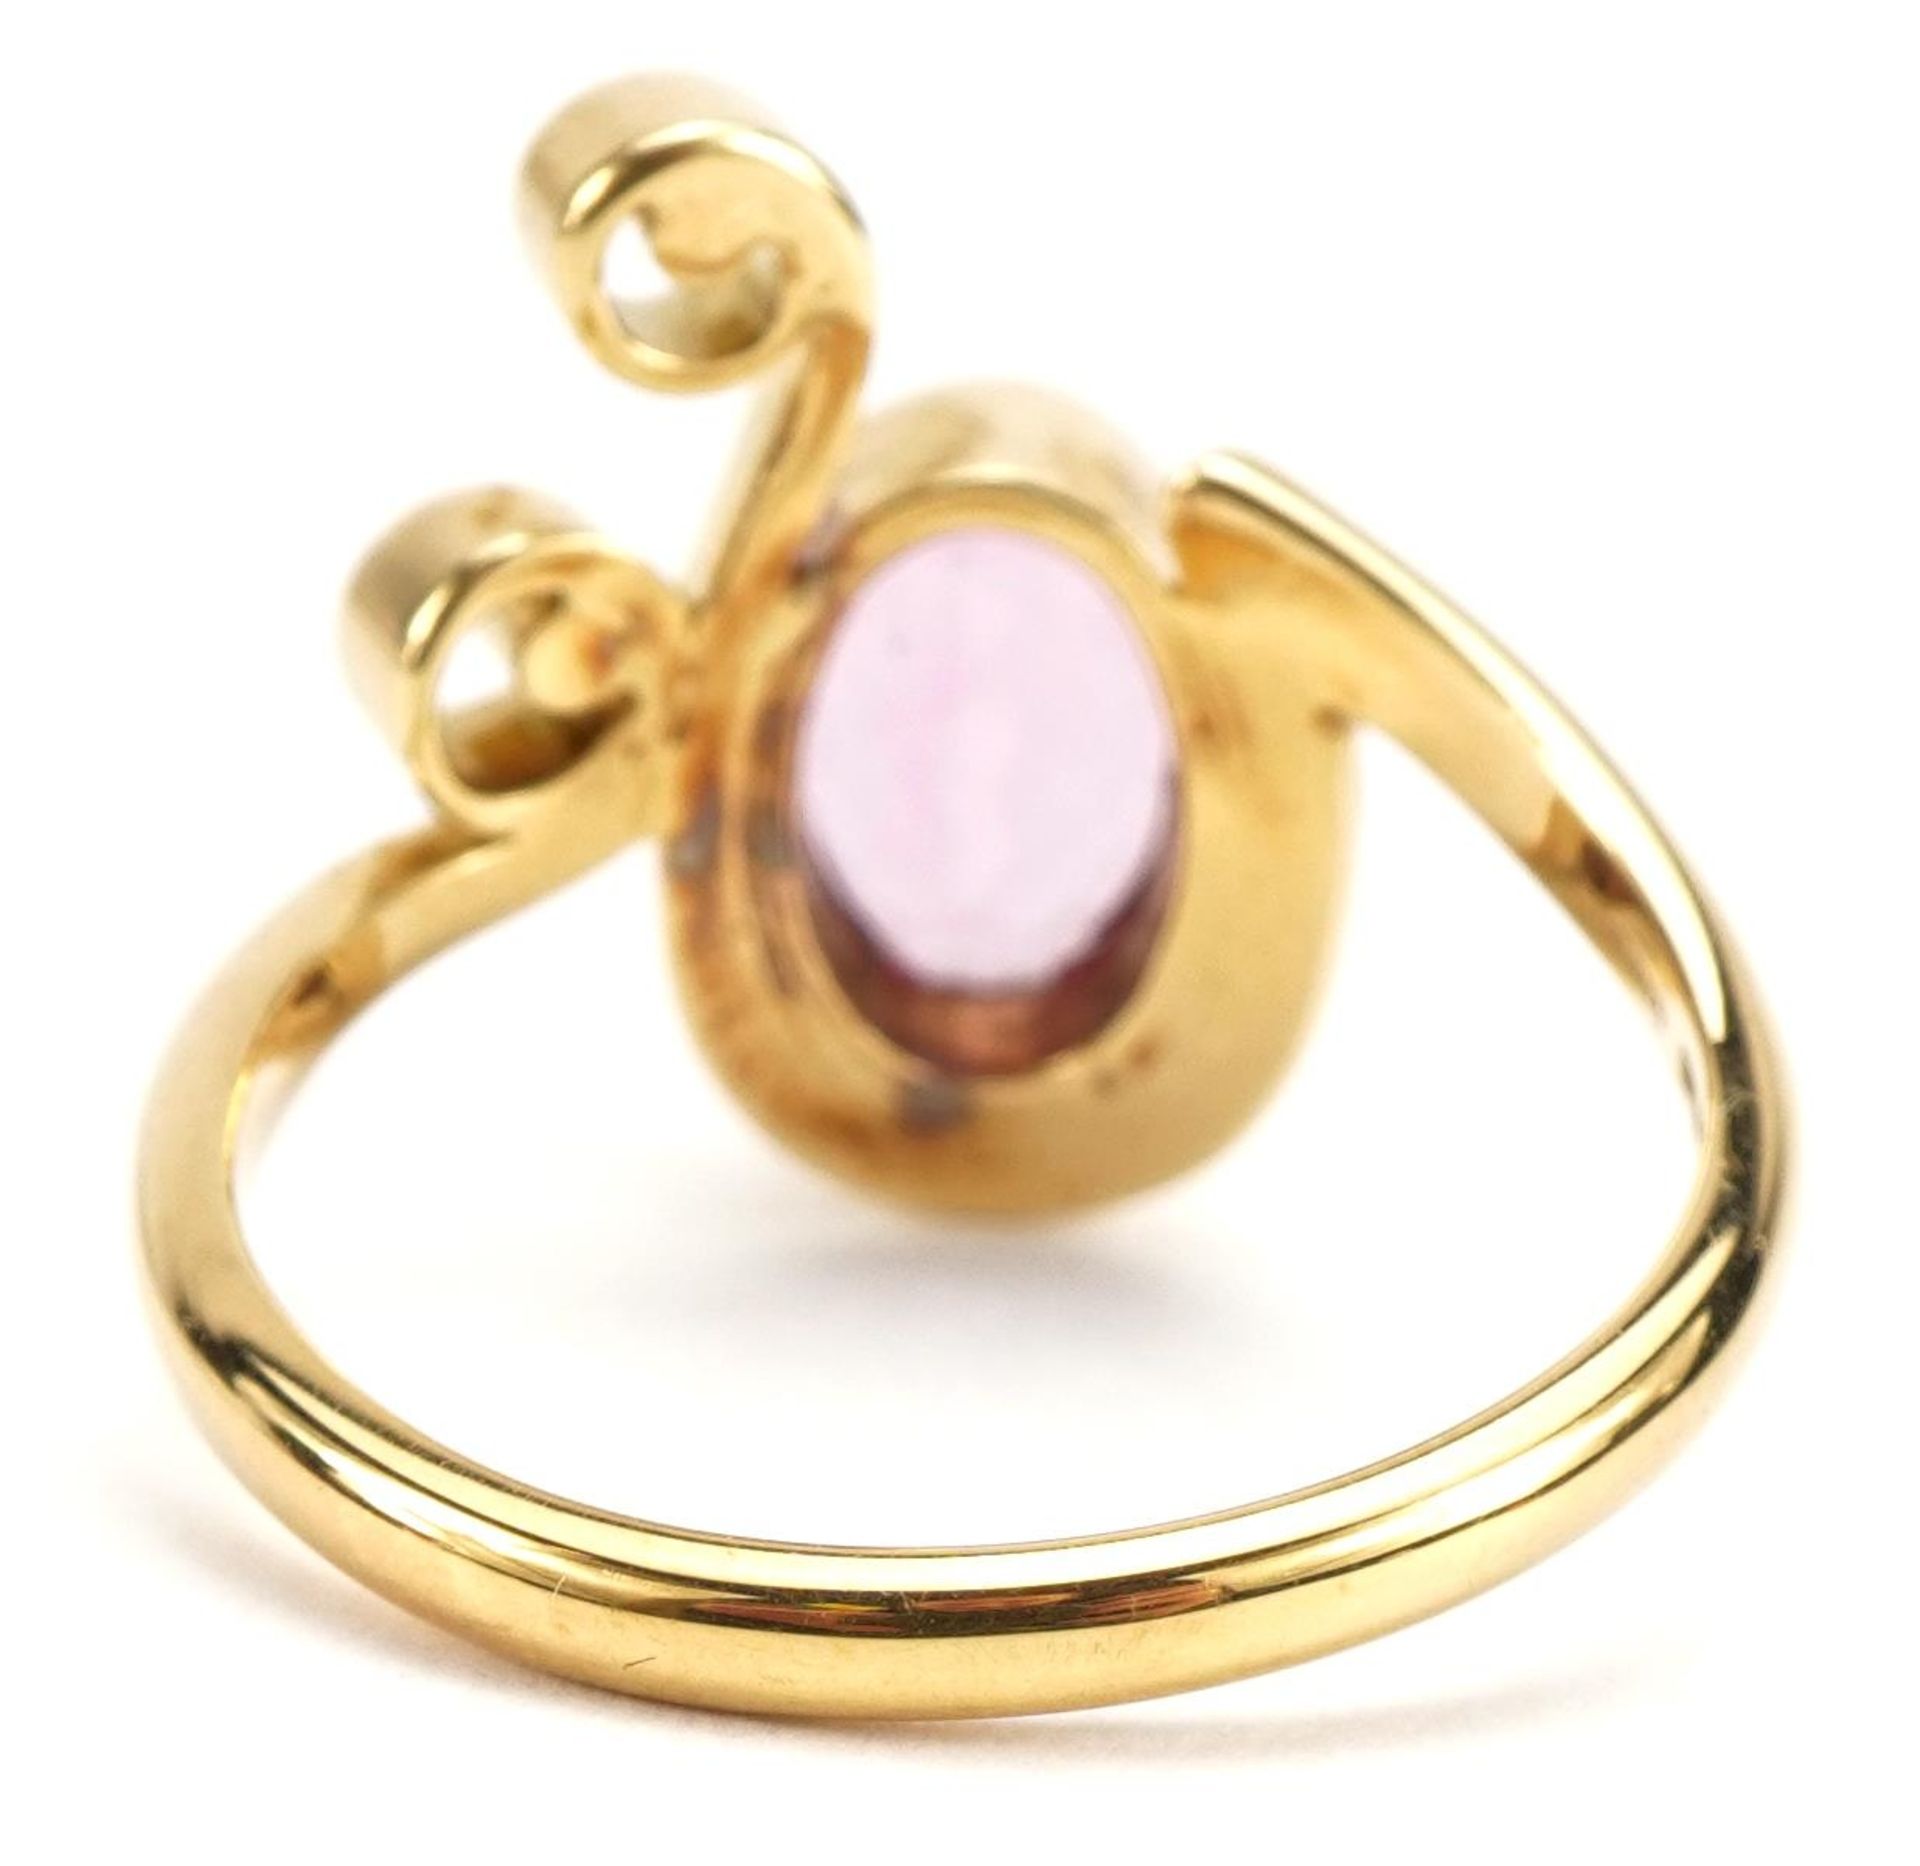 Jon & Valerie Hill, 18ct gold pink stone ring housed in a Jon & Valerie Hill box, Birmingham 2001, - Image 2 of 4